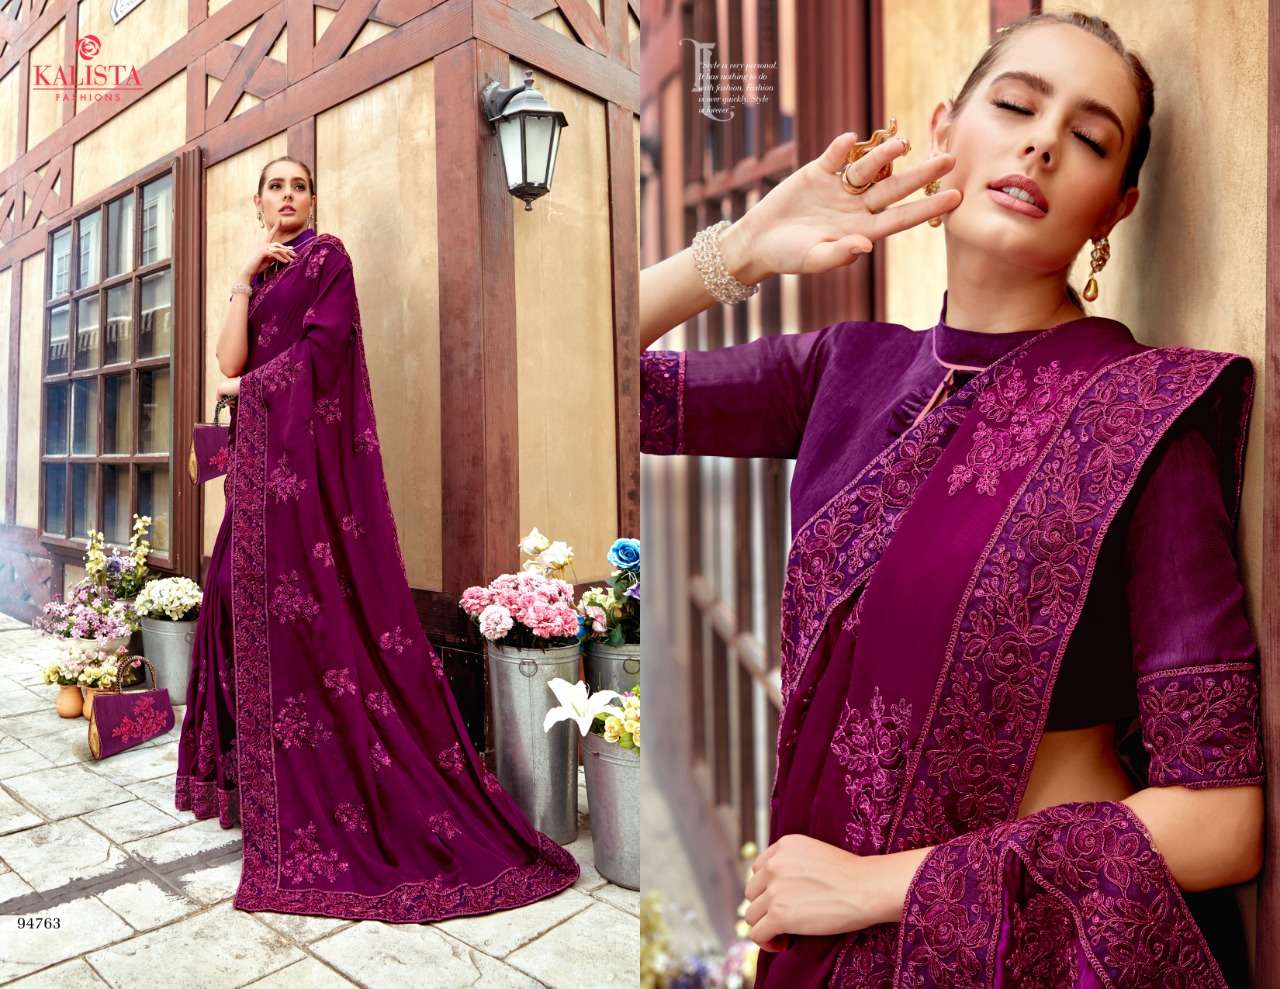 Buy Maharani Kalista Online Wholesale Designer Jeni Silk Saree